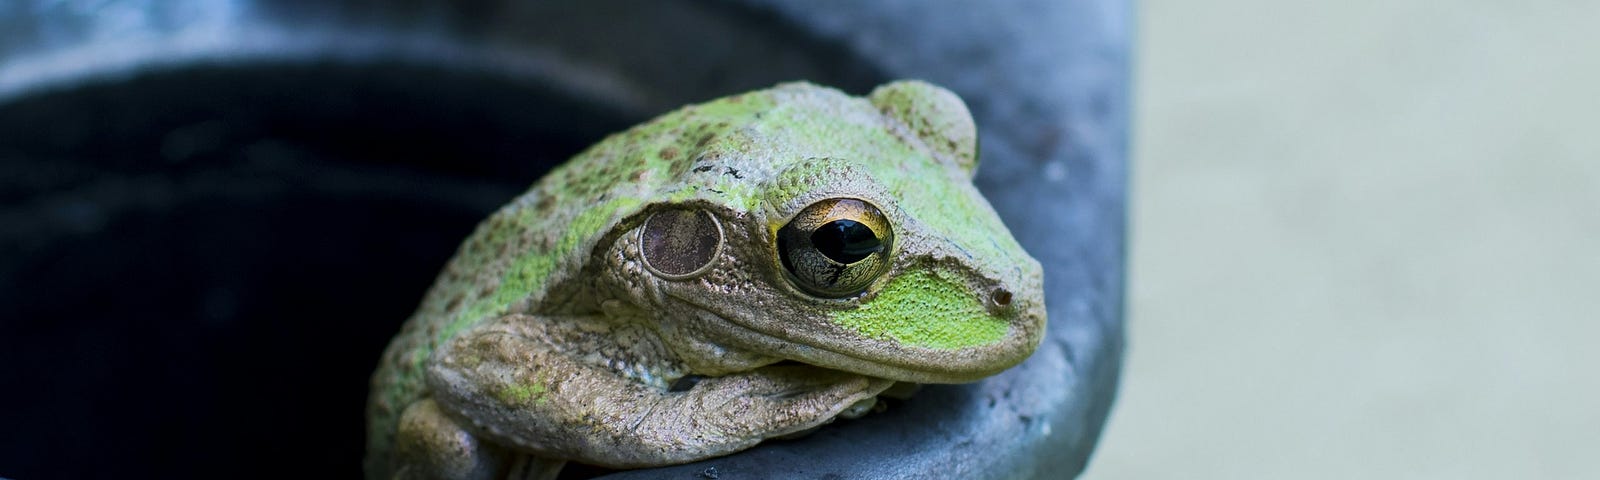 A frog saying goodbye